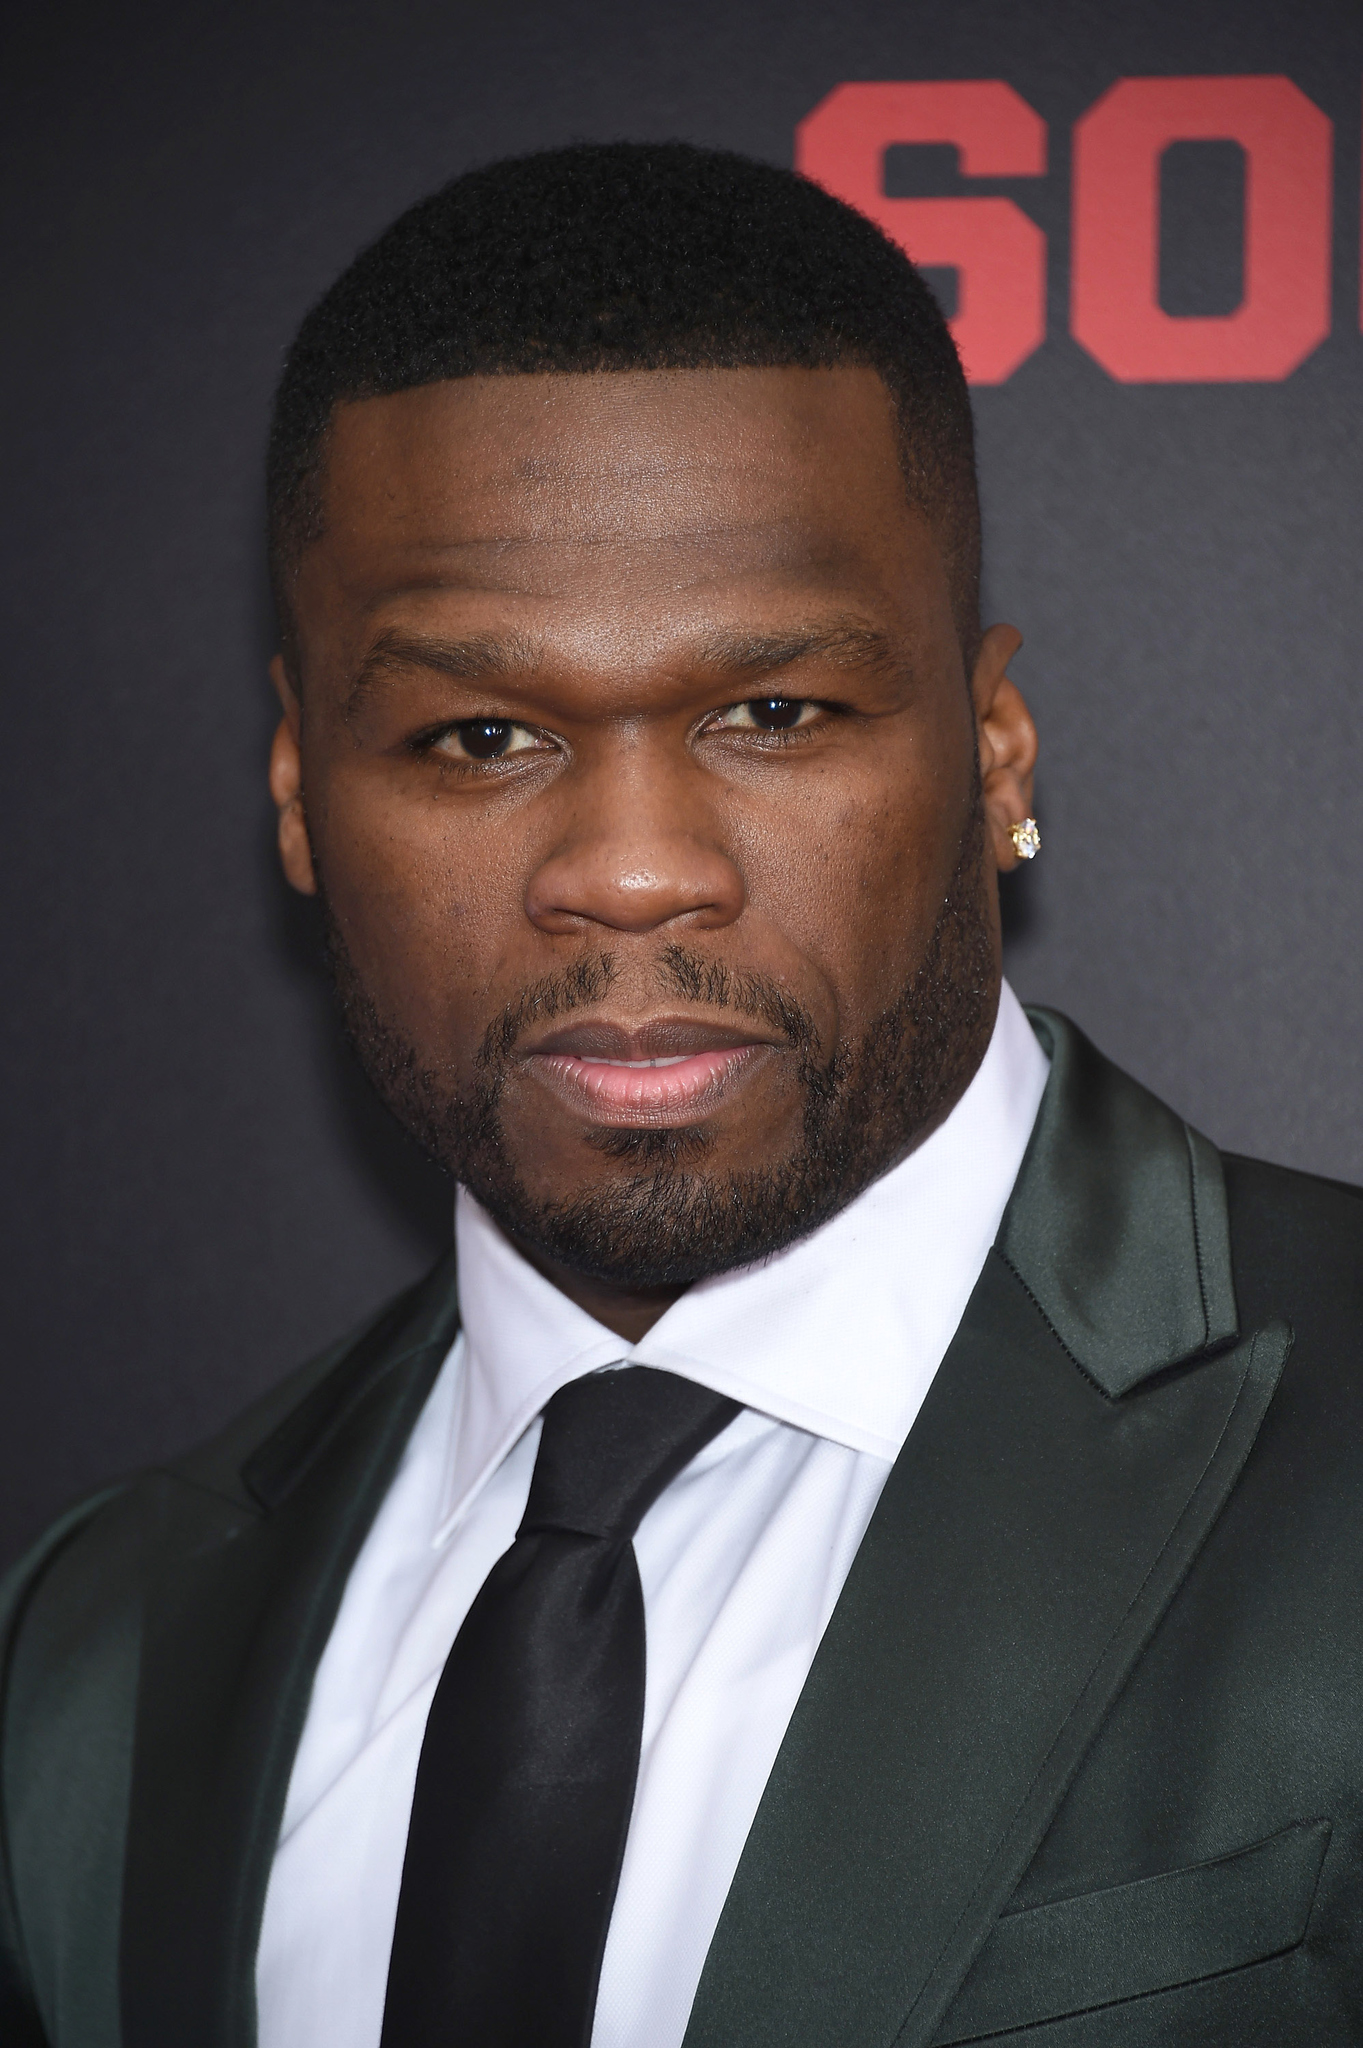  Biografía de 50 Cent